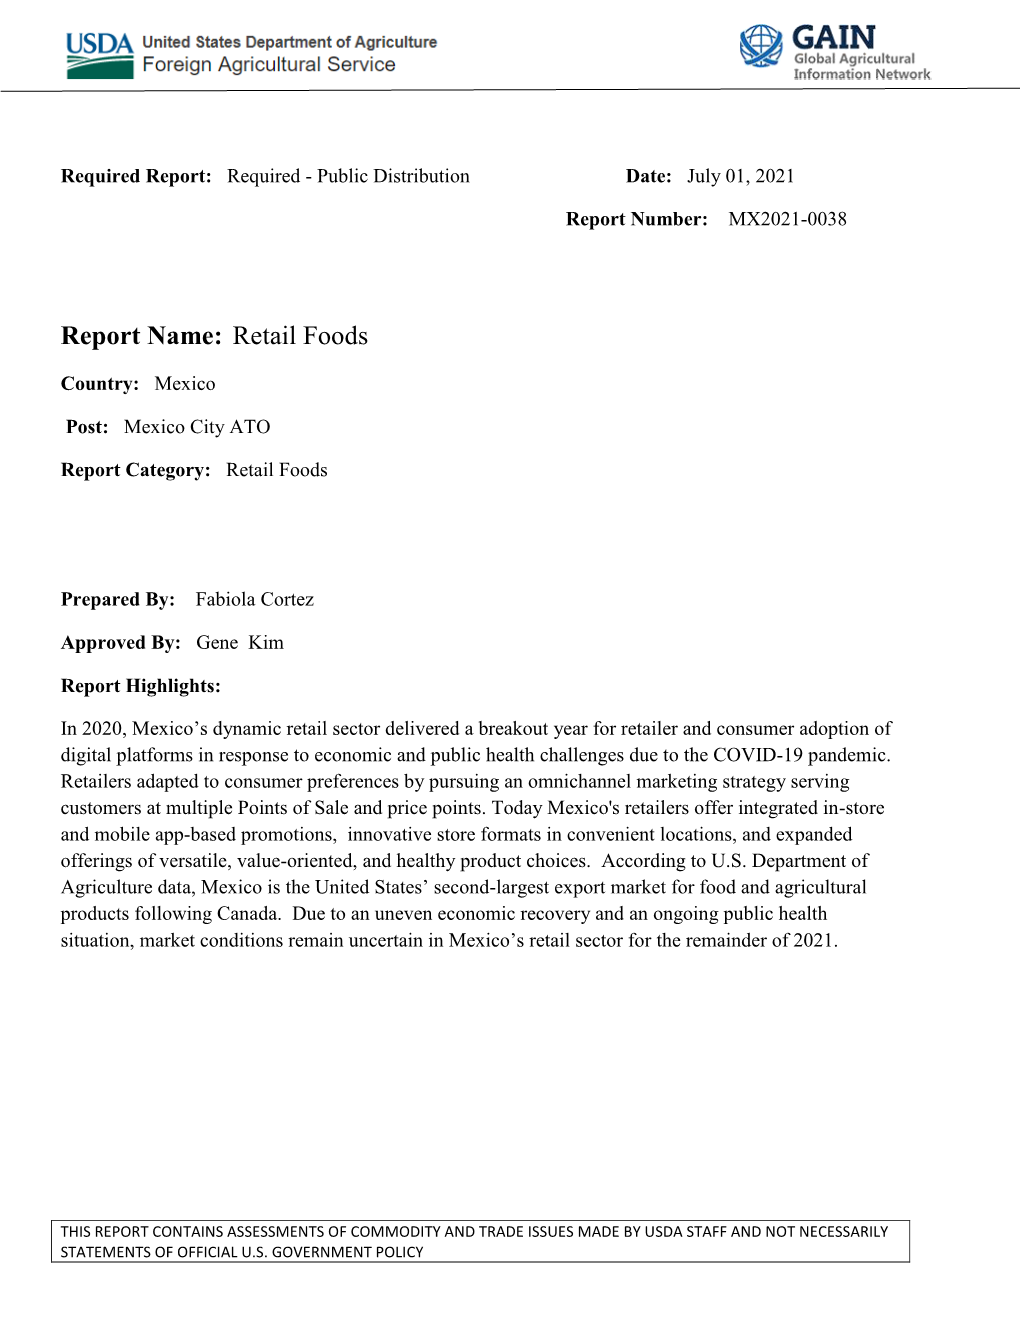 Report Name: Retail Foods